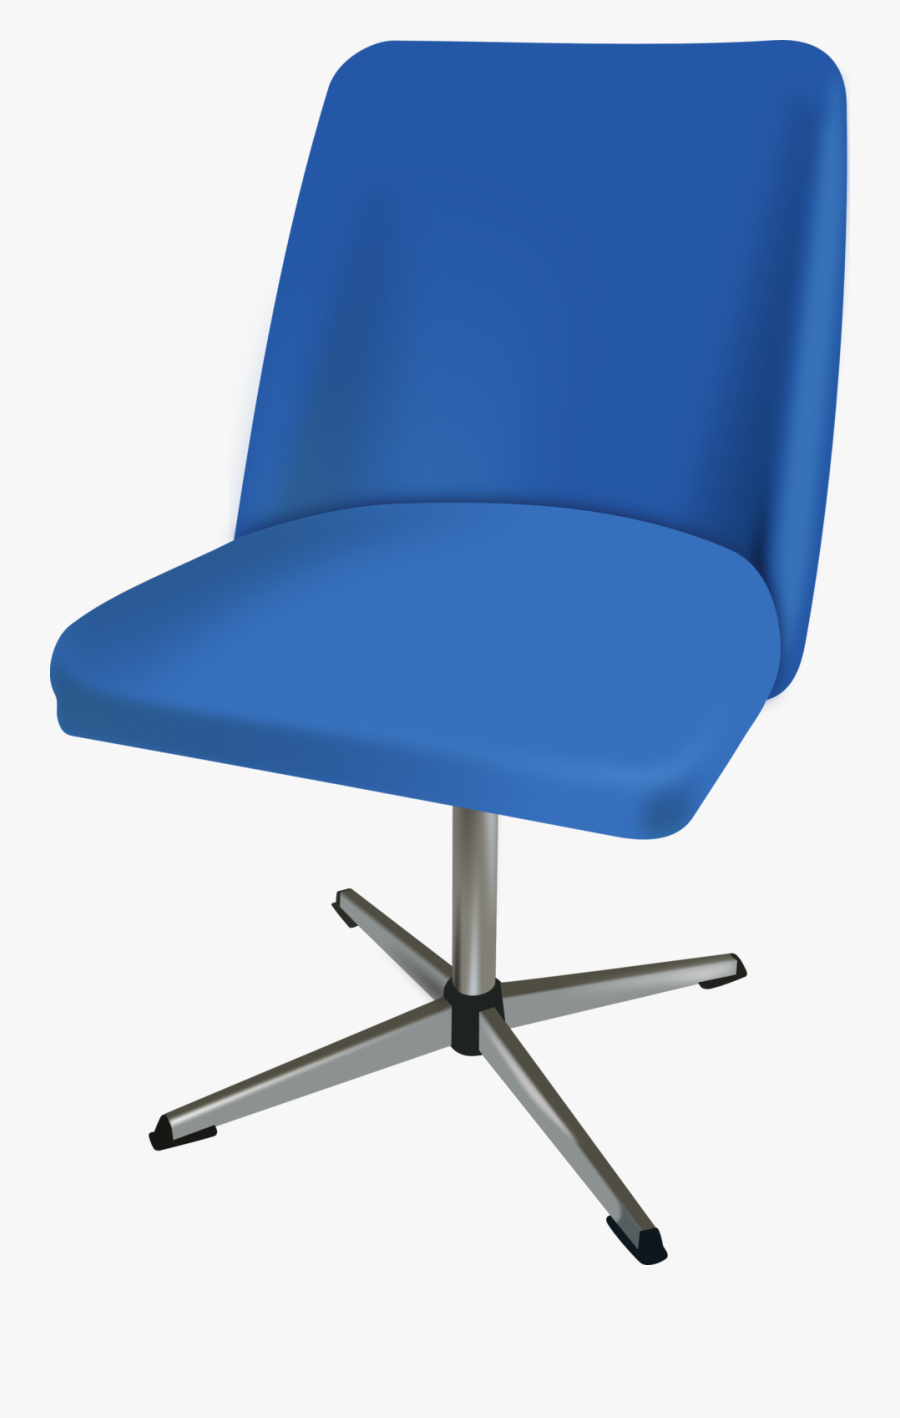 70s Chair - Desk Chair Clipart, Transparent Clipart